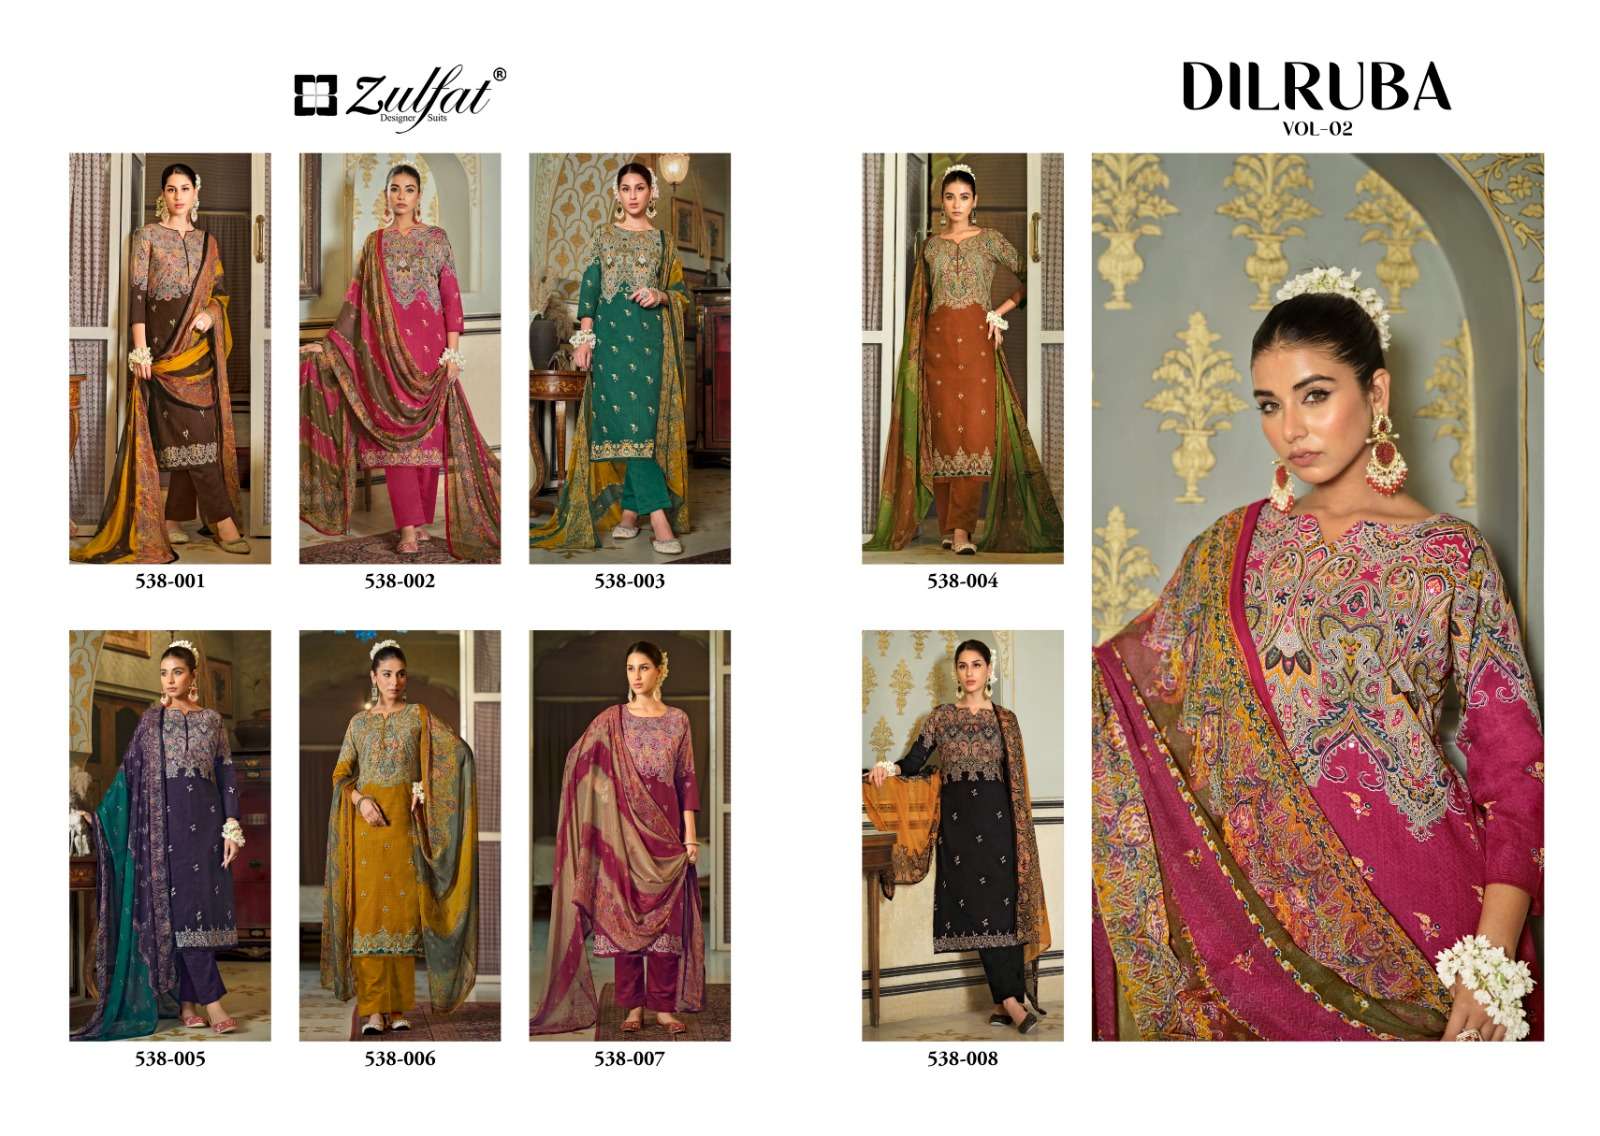 zulfat designer suits dilruba vol 2 cotton elegant look salwqar suit catalog